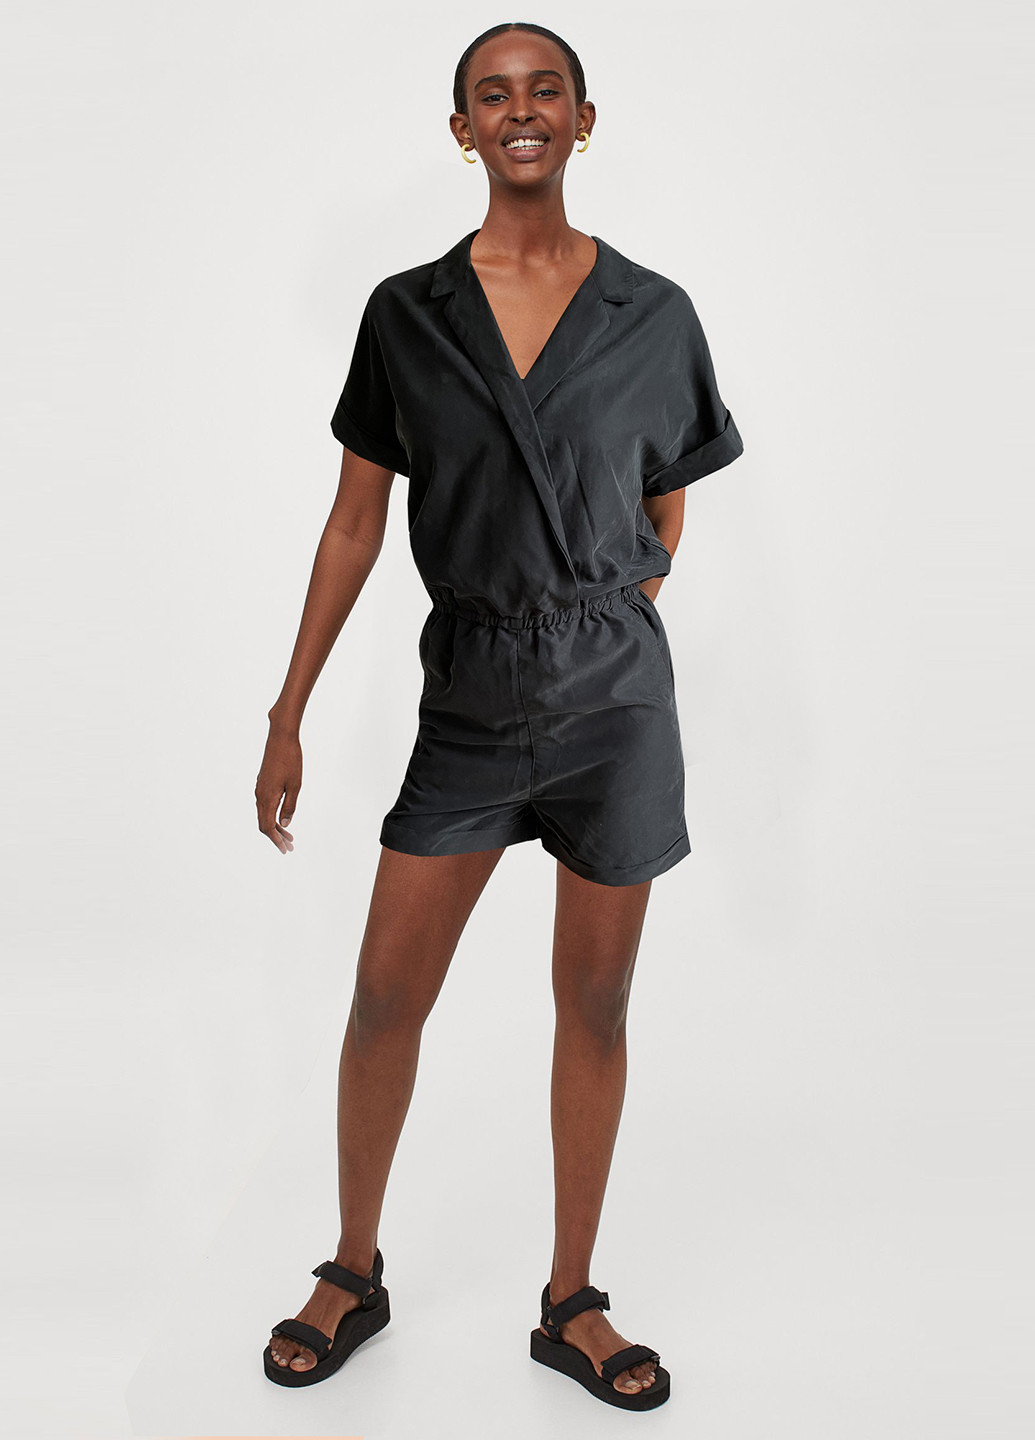 Комбинезон H&M комбинезон-шорты однотонный тёмно-серый кэжуал полиэстер